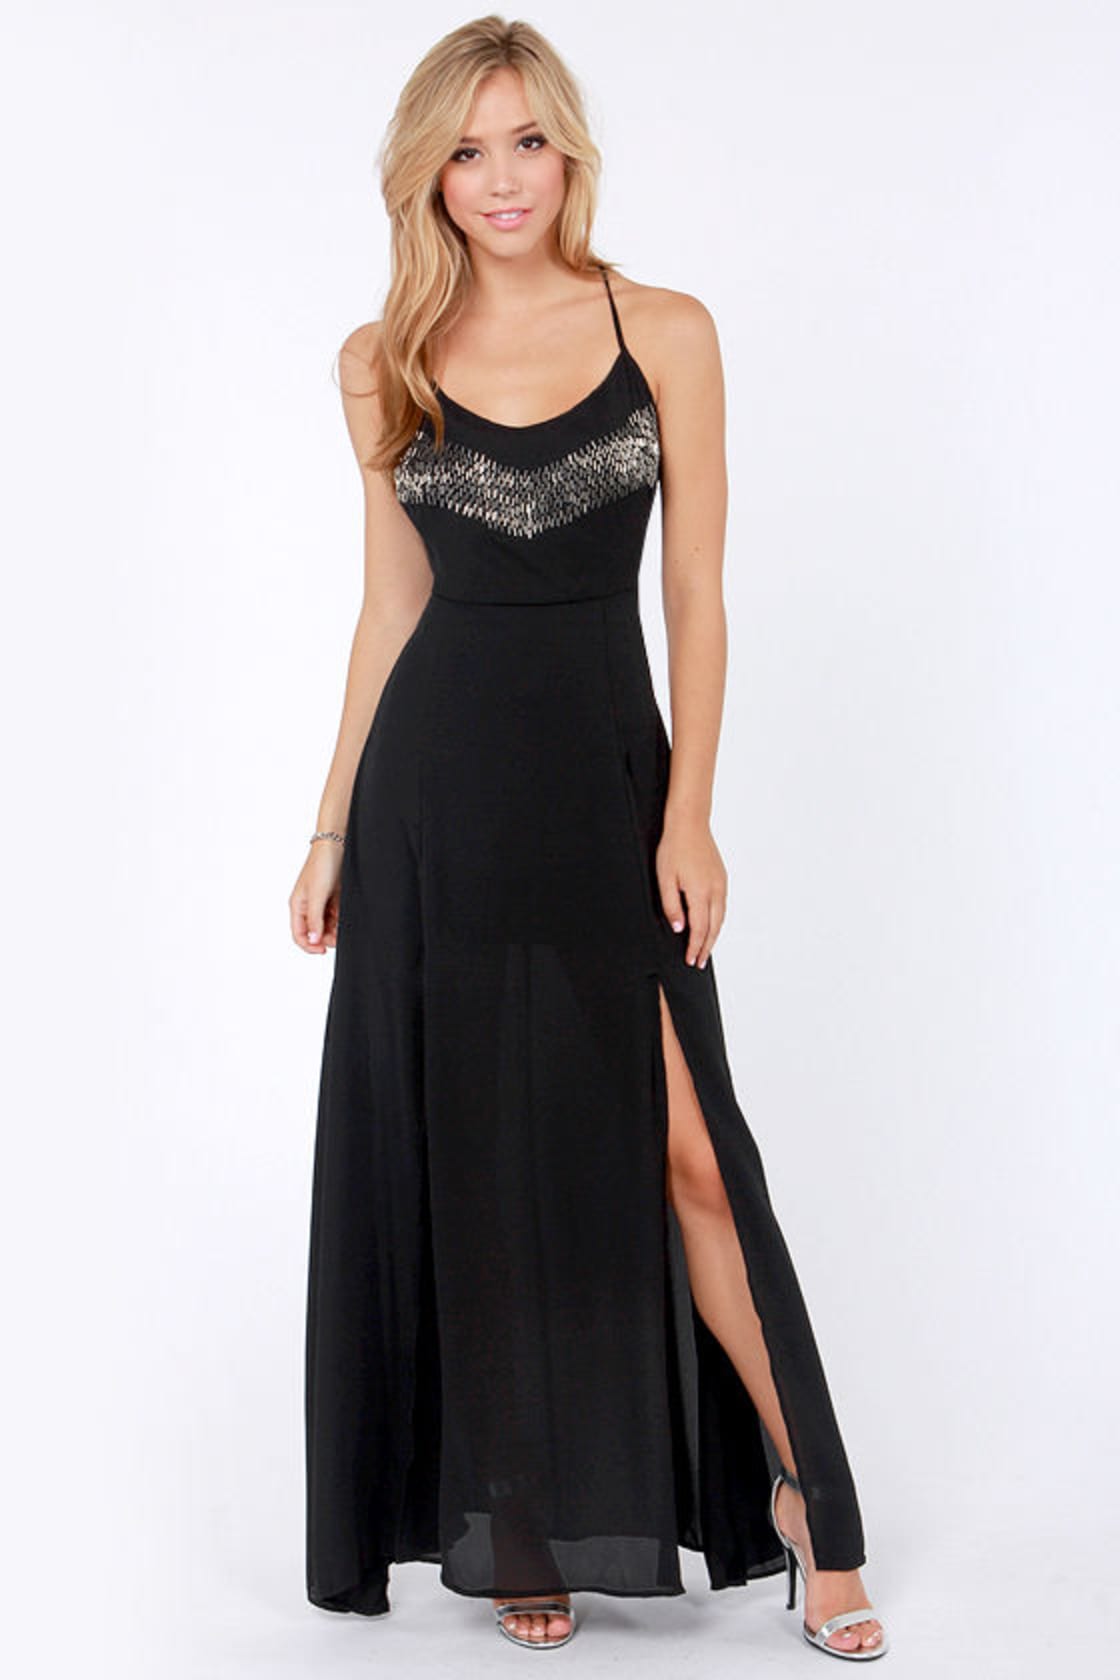 Sexy Black Dress - Maxi Dress - Racer Back Dress - $85.00 - Lulus